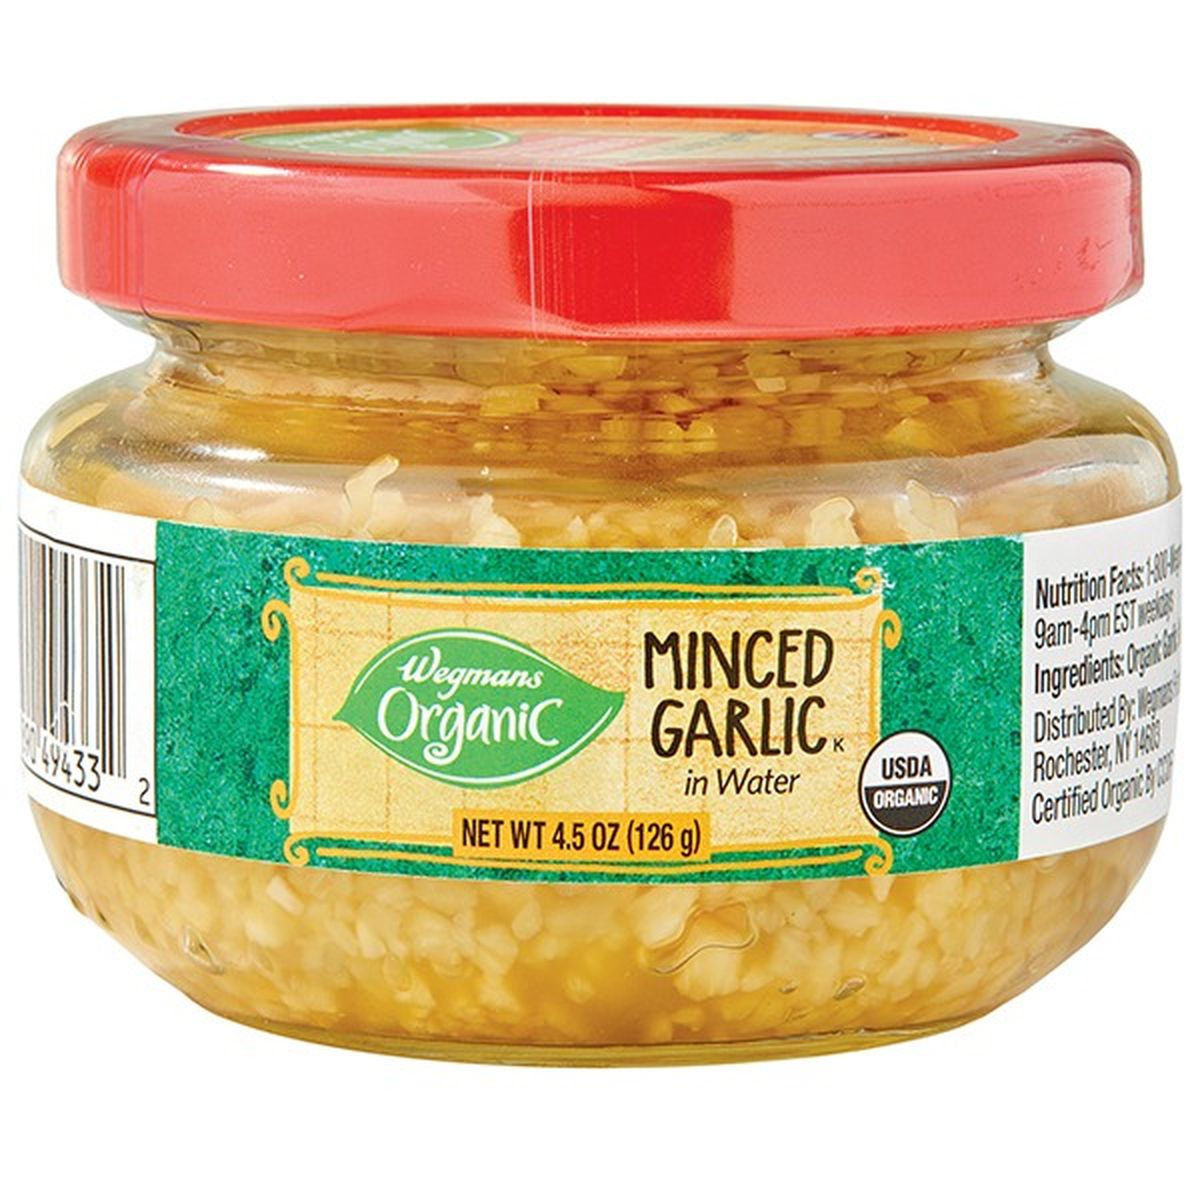 Calories in Wegmans Organic Garlic, Minced, in Water